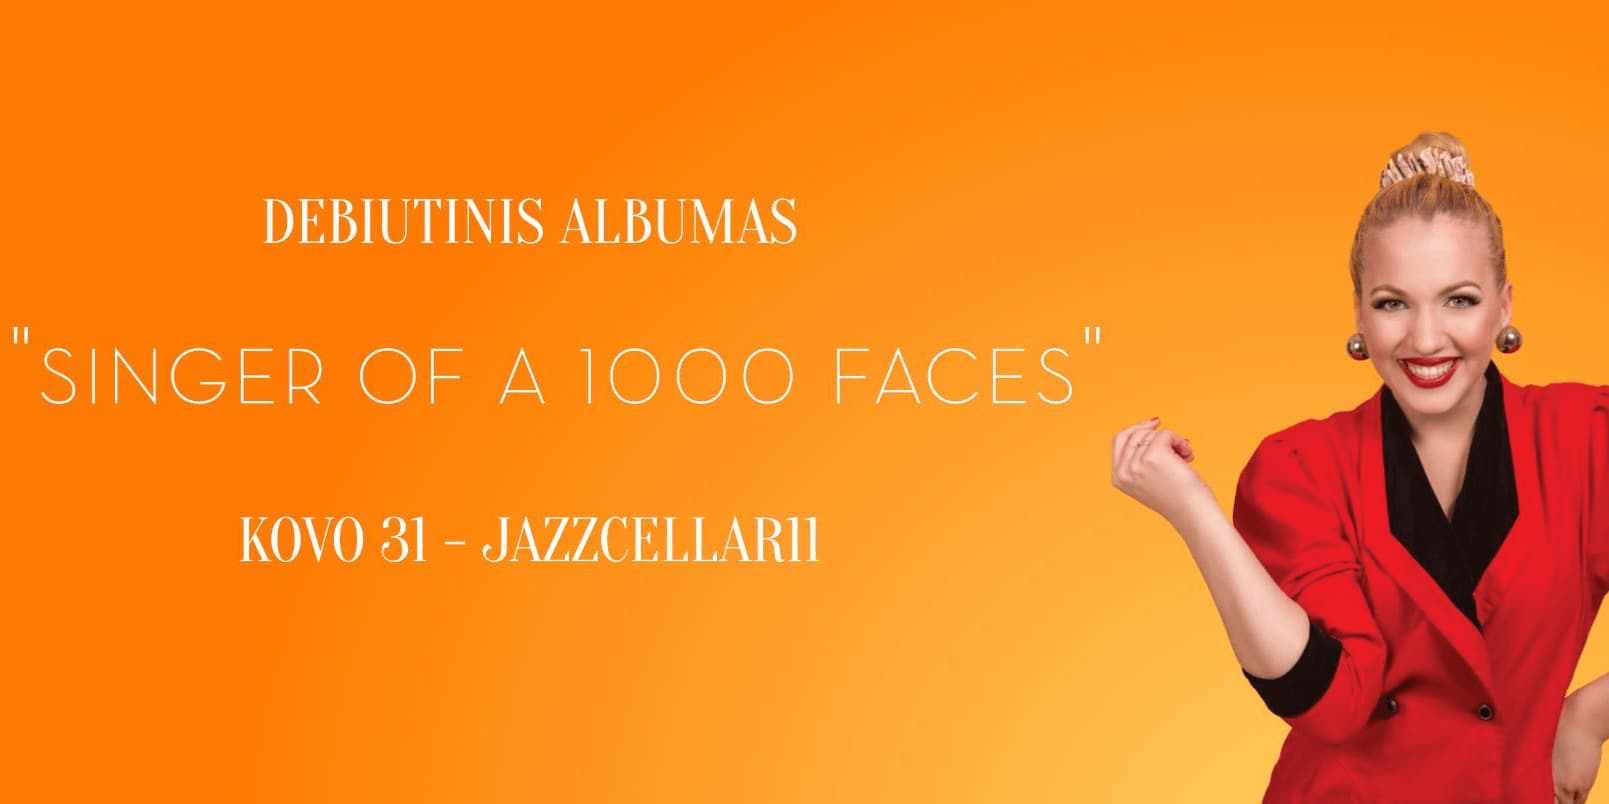 Veronika ChiChi "Singer of a 1000 faces" - Albumo pristatymas